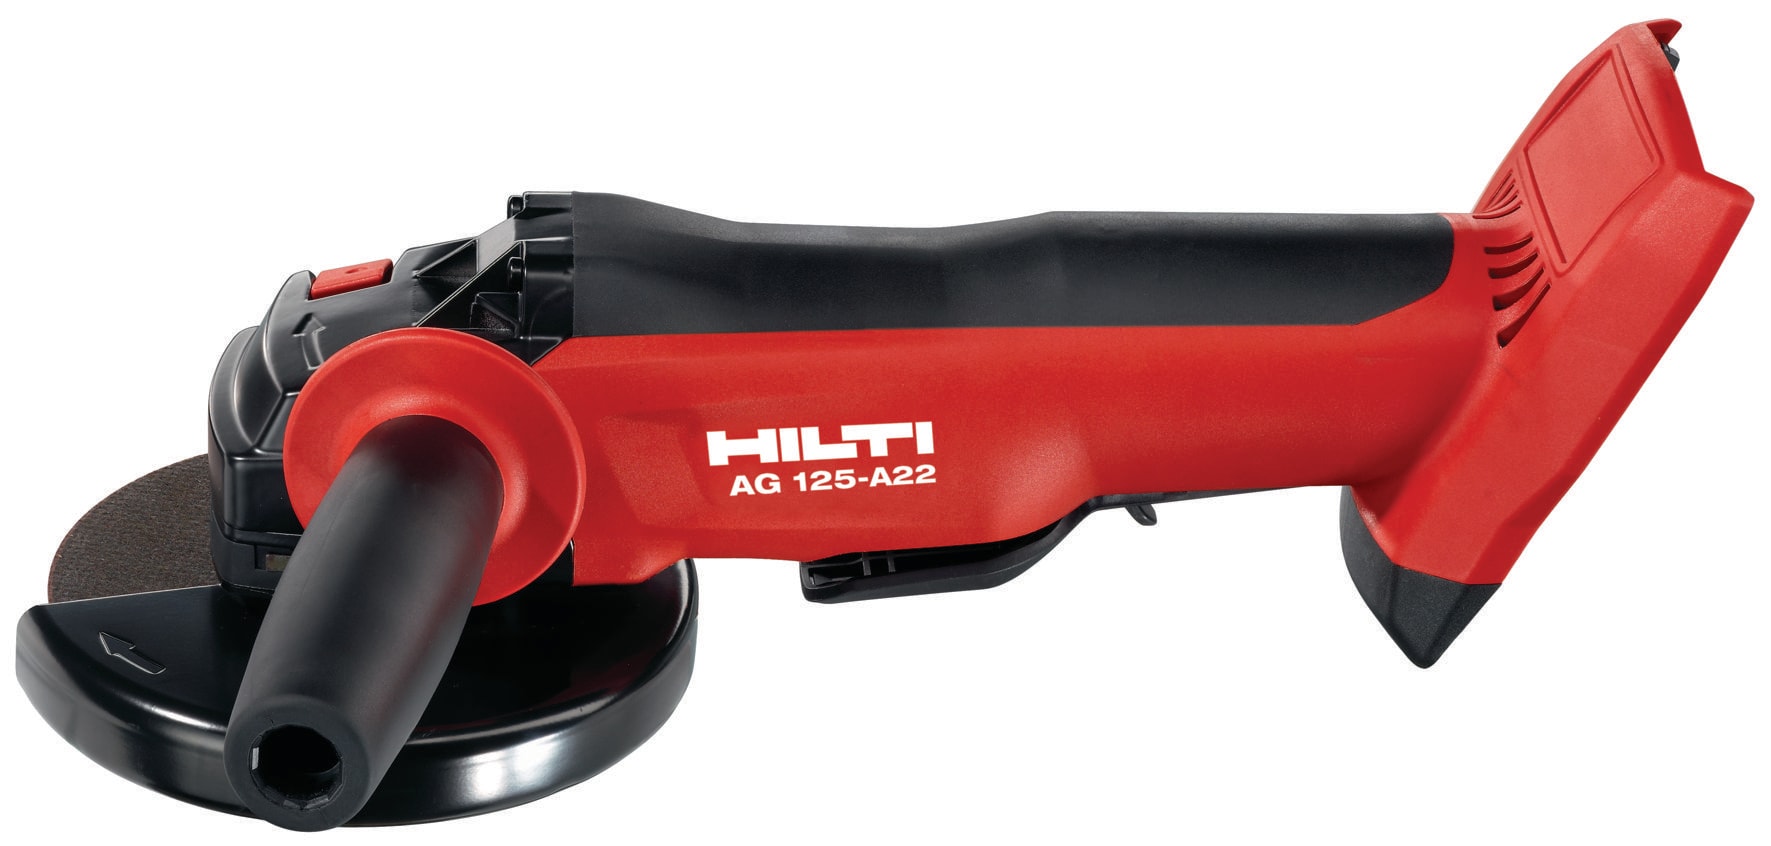 Hilti Hilti AG 125-13S Angle Grinder 125mm 110V 